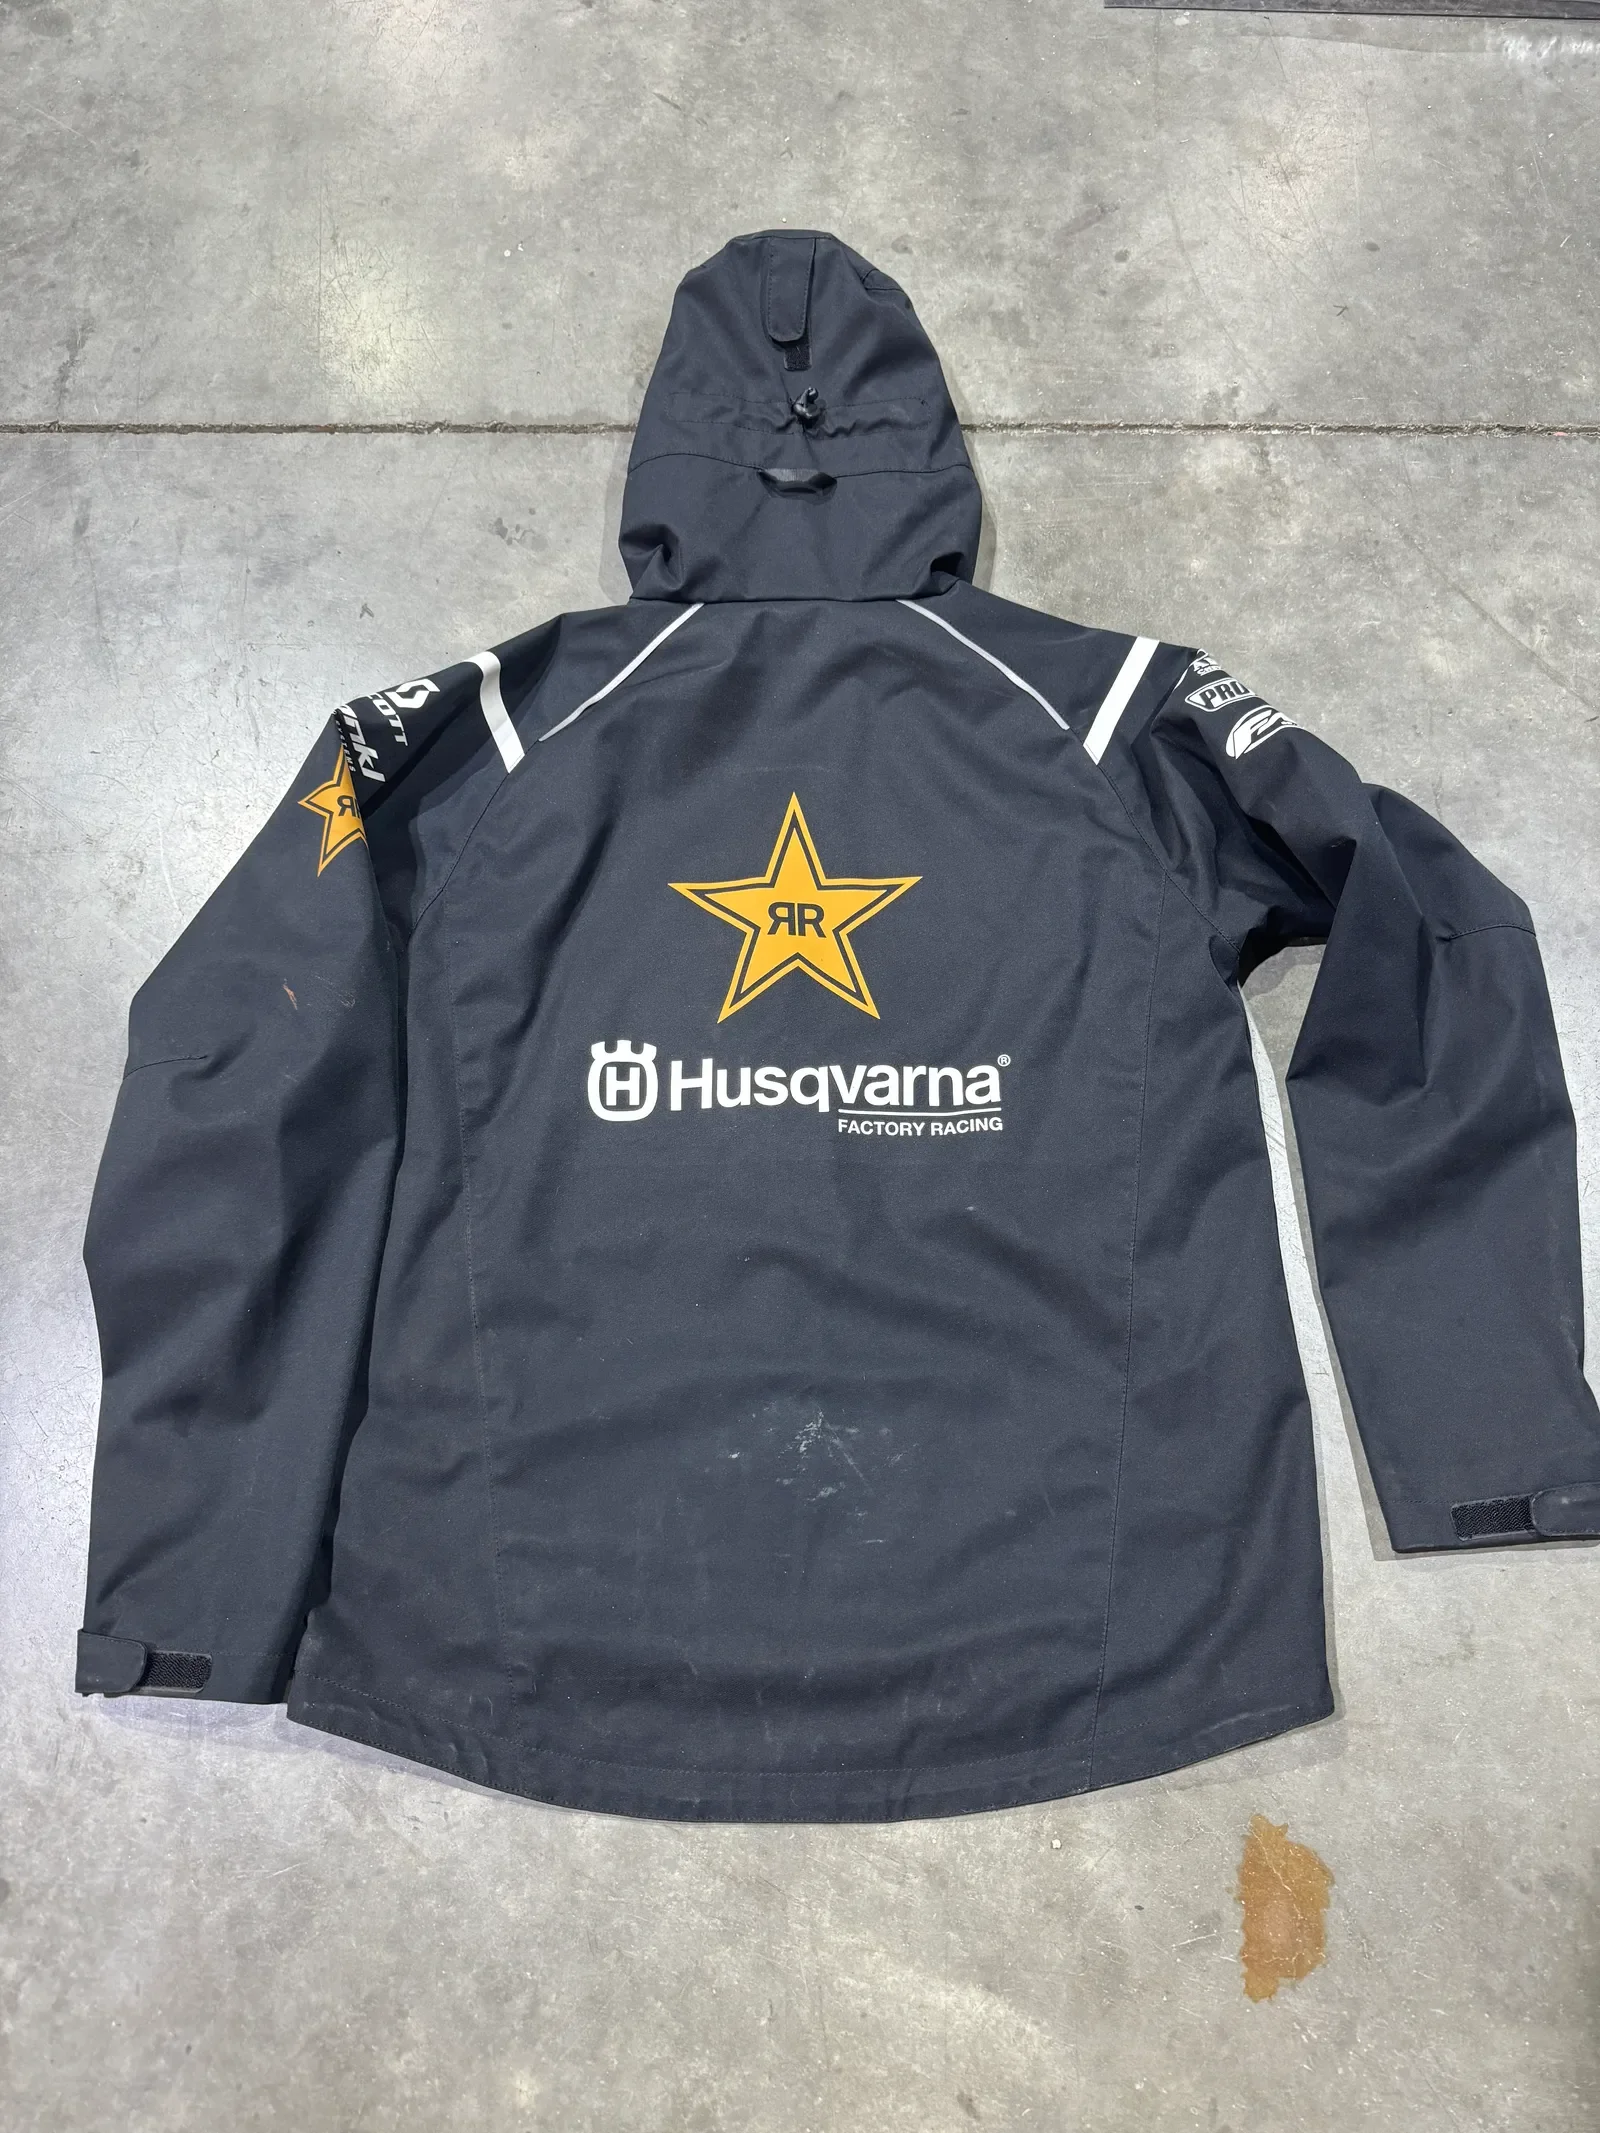 Rockstar Energy Drink Husqvarna Team Issue Jacket Size XL